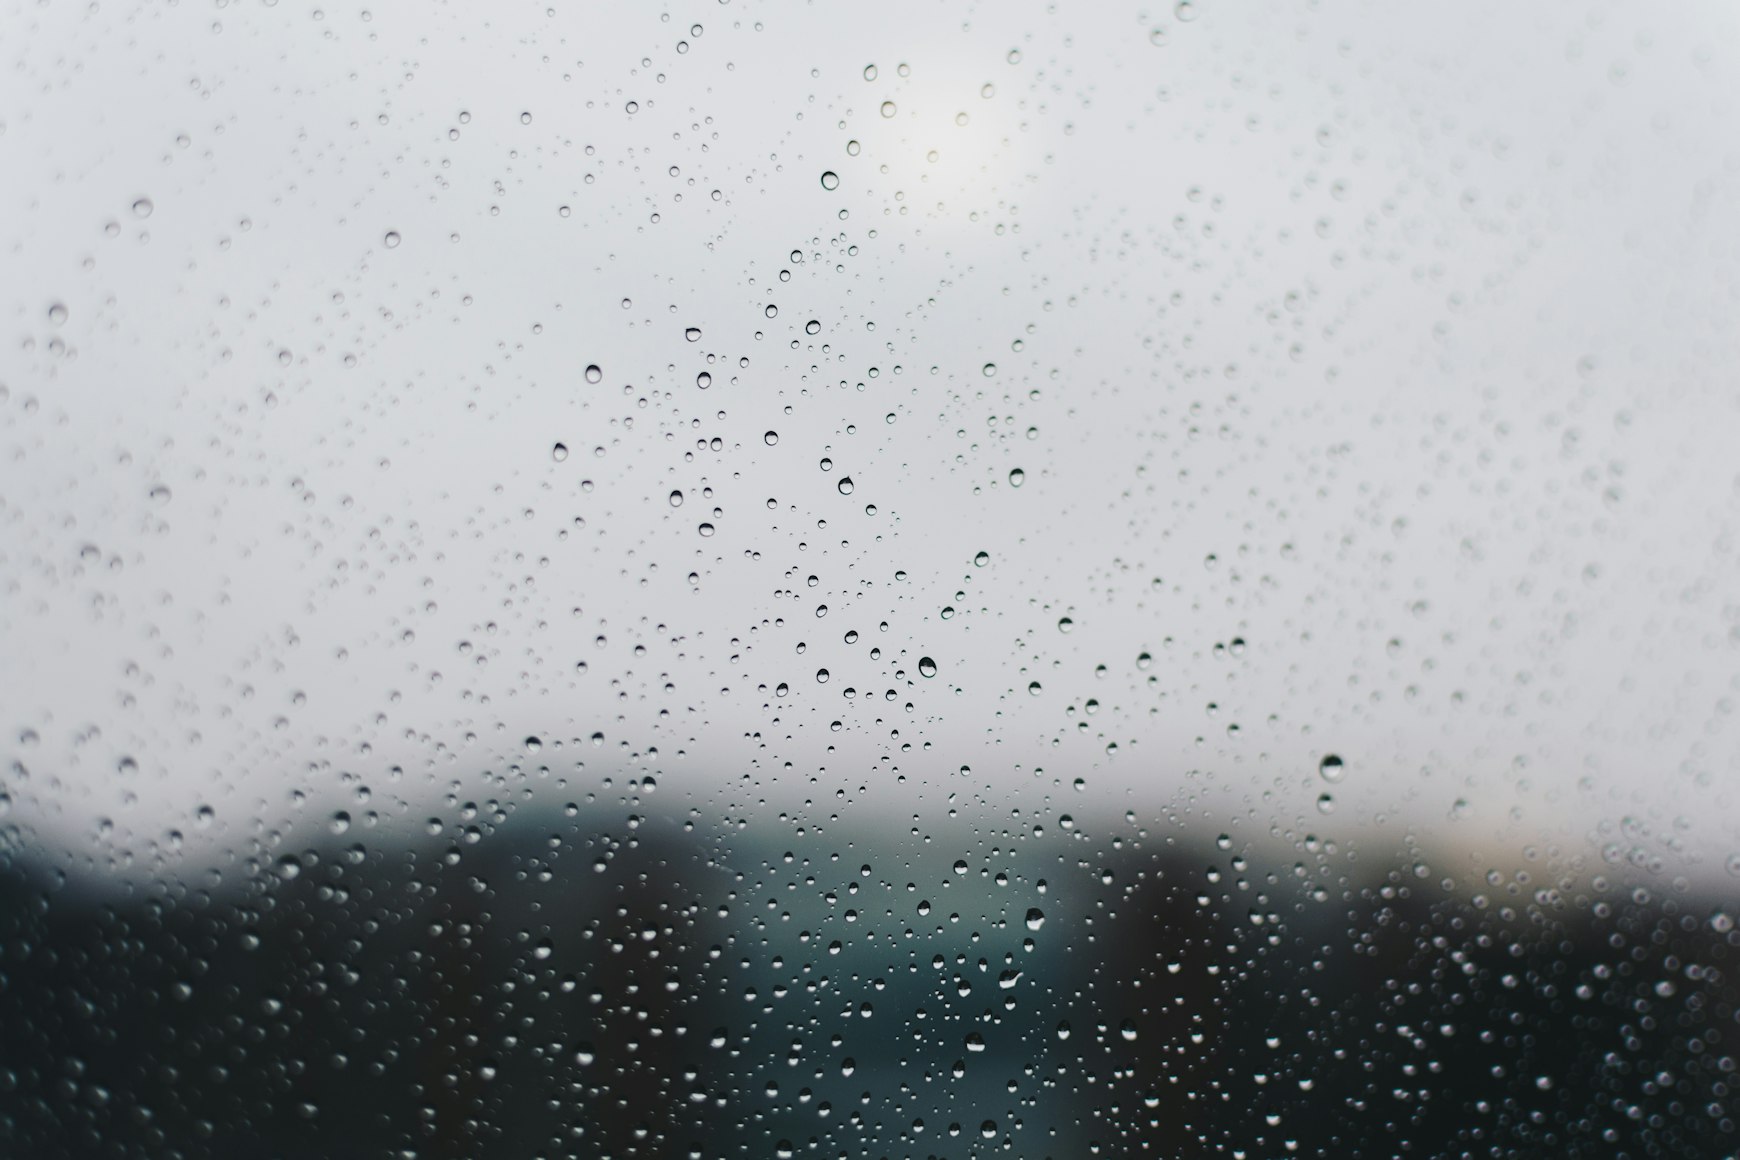 Rain on window - Jose Fontano - Unsplash